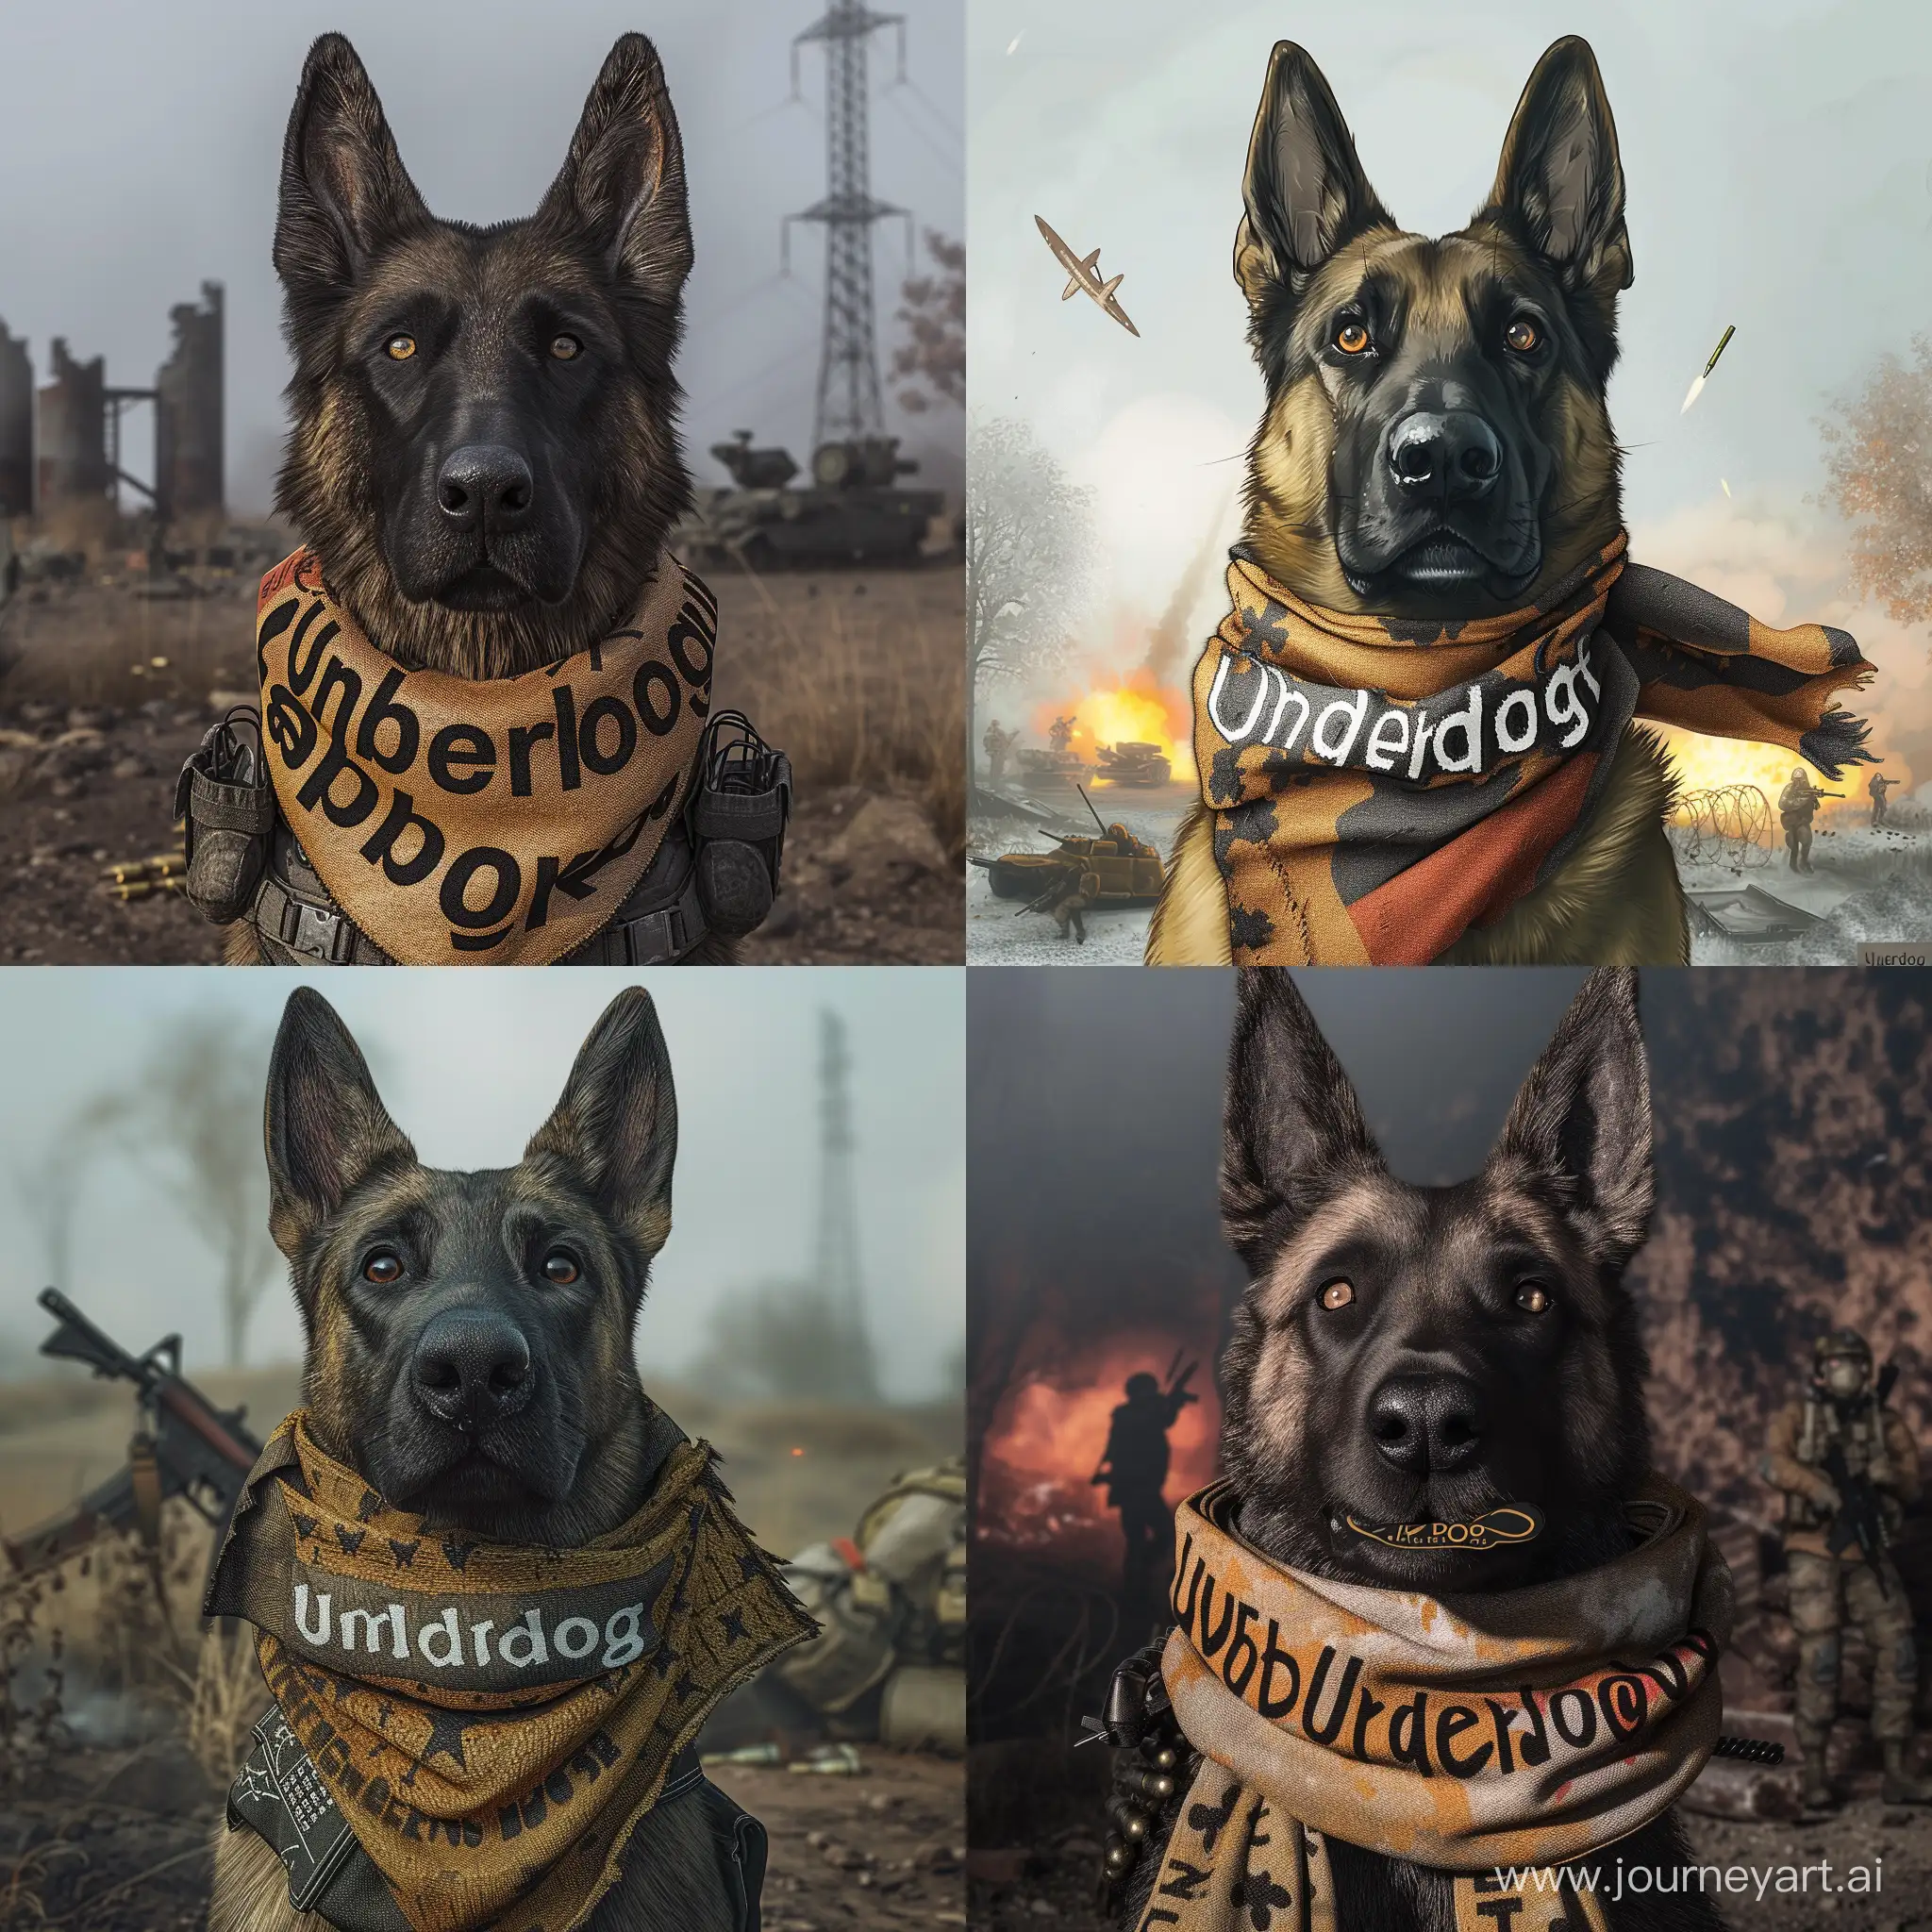 Brave-Belgian-Malinois-Dog-in-War-Zone-Wearing-Underdog-Scarf